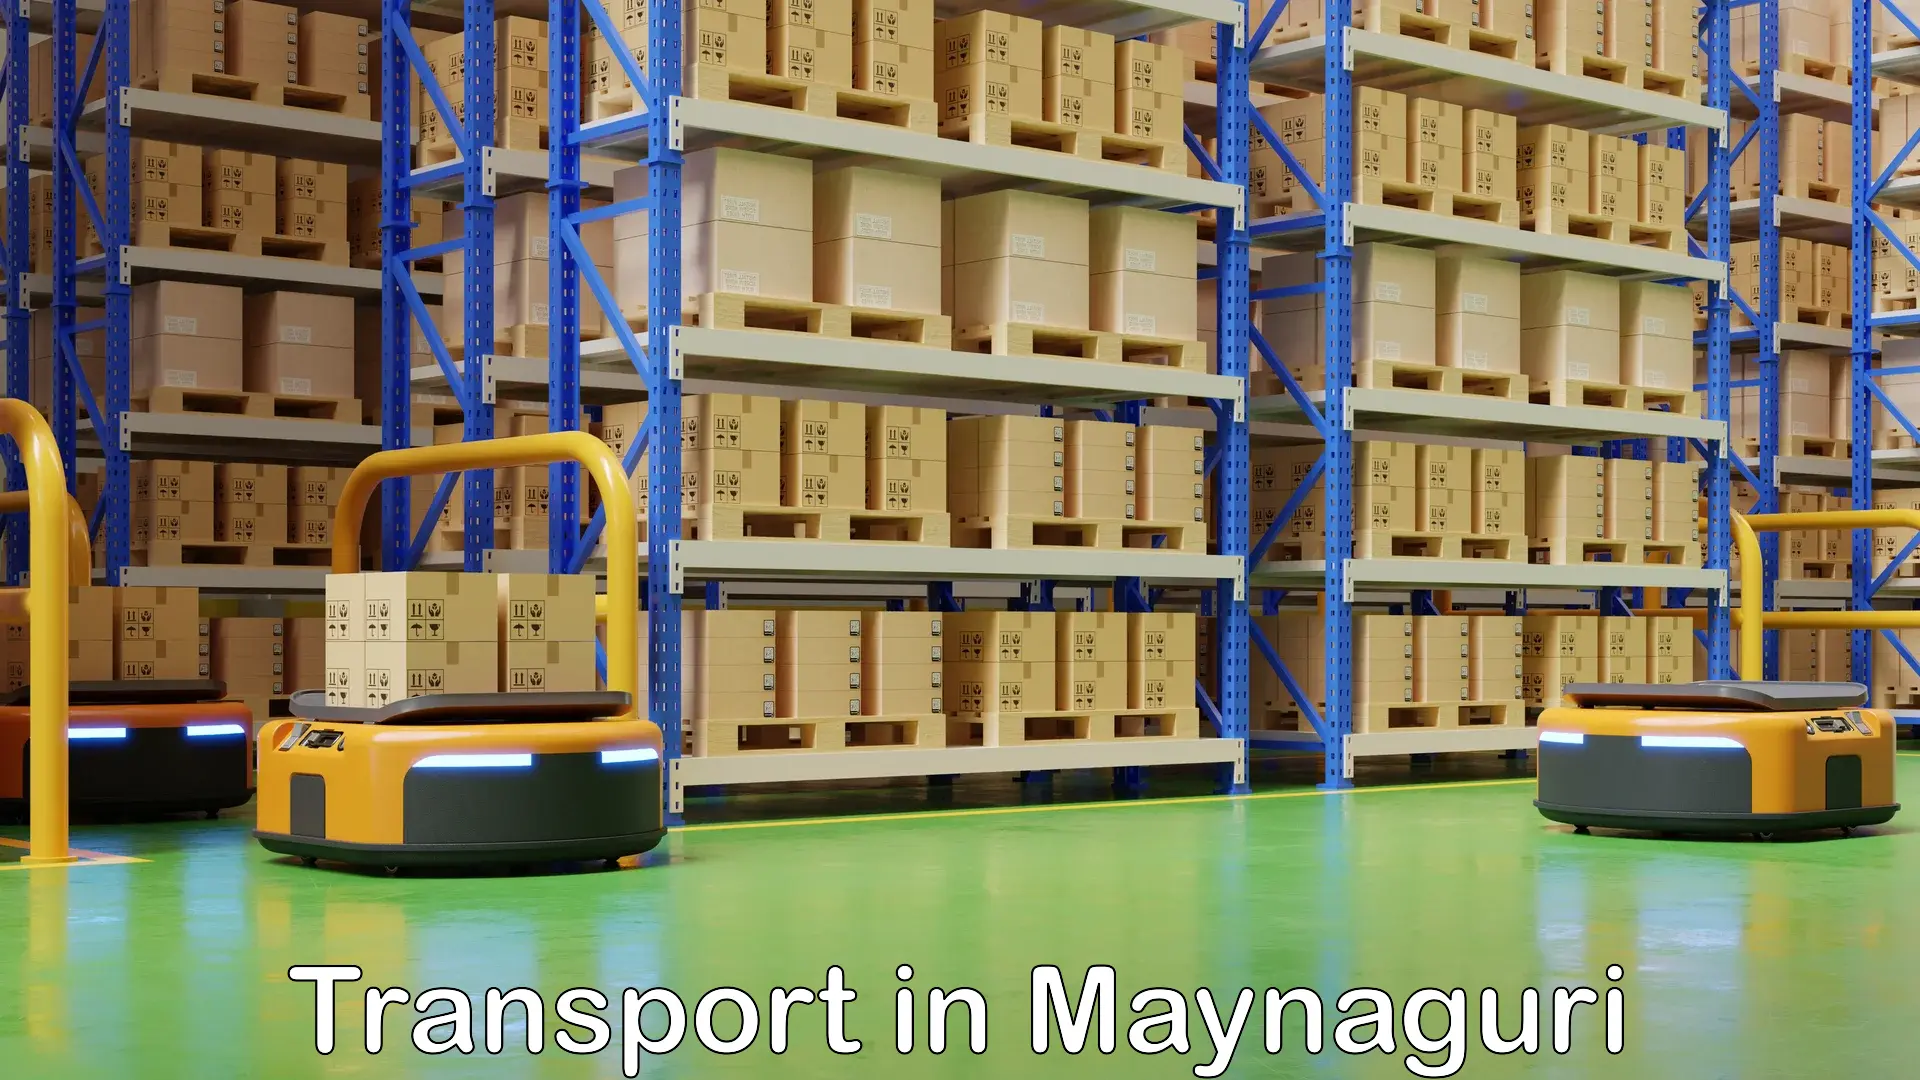 Transportation services in Maynaguri